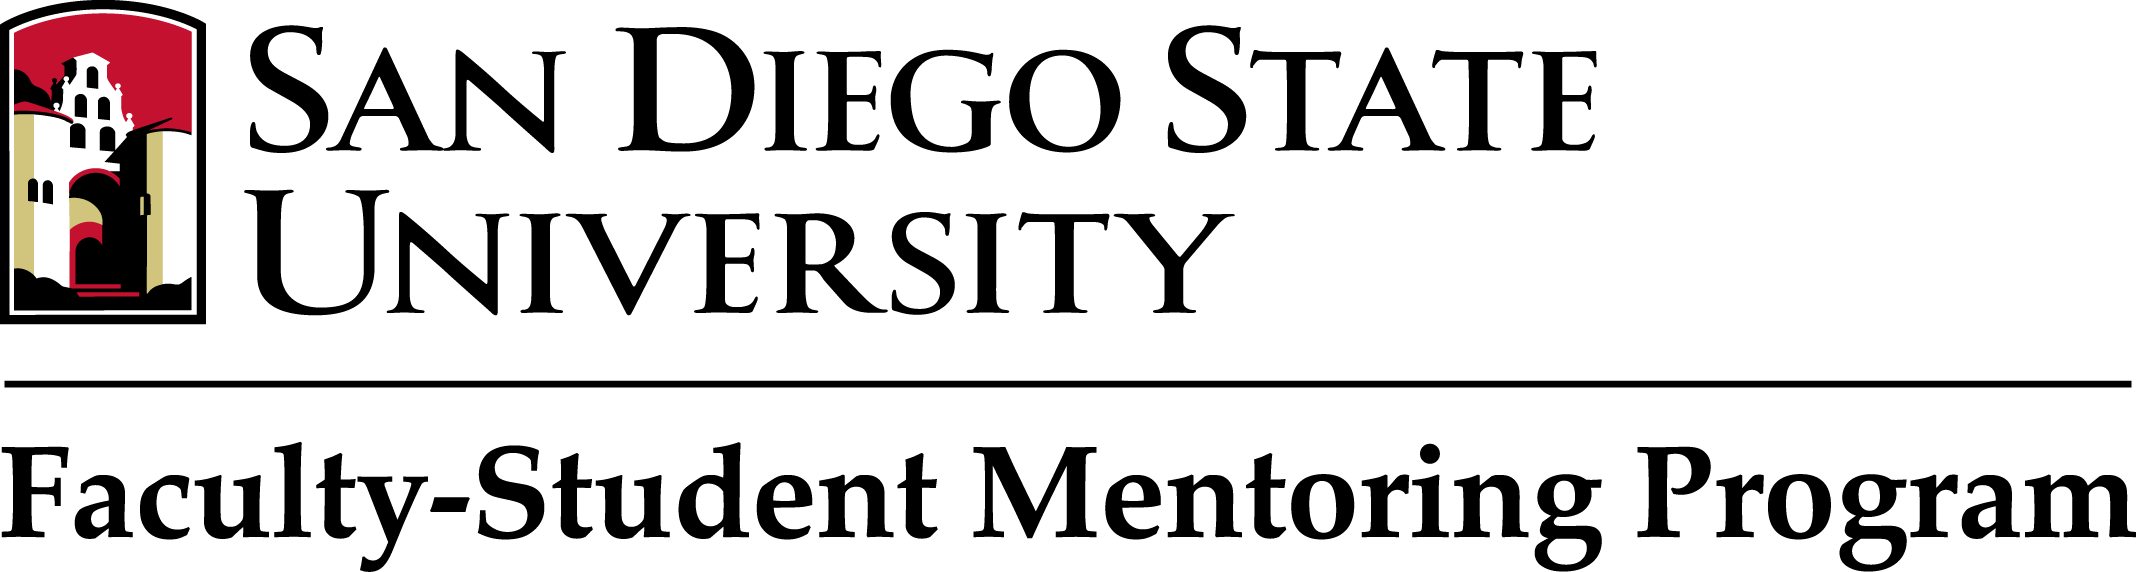 fsmp logo